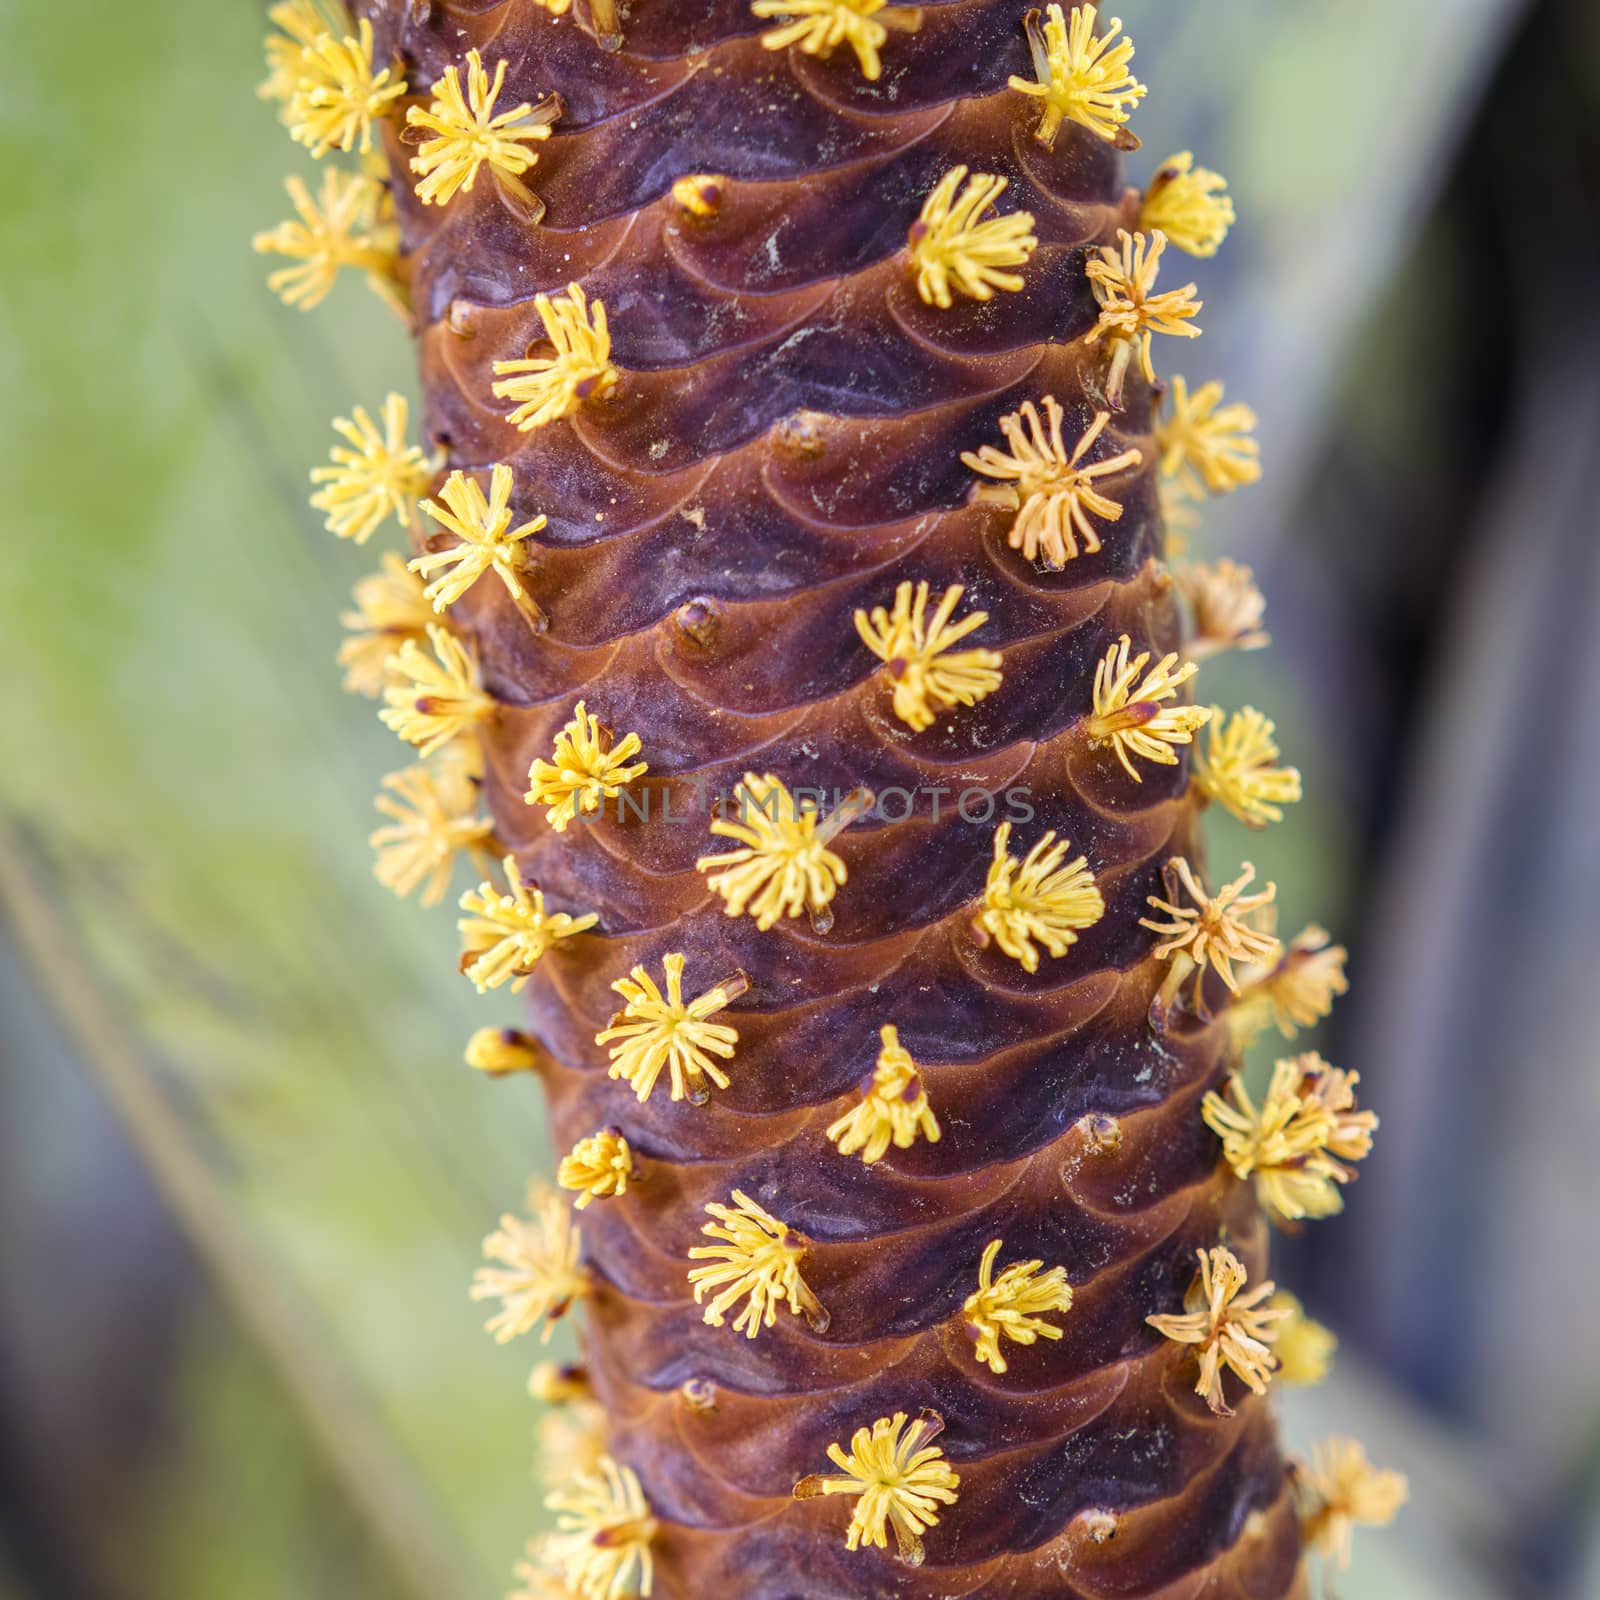 Male Flowers of Lodoicea maldivica by GNNick